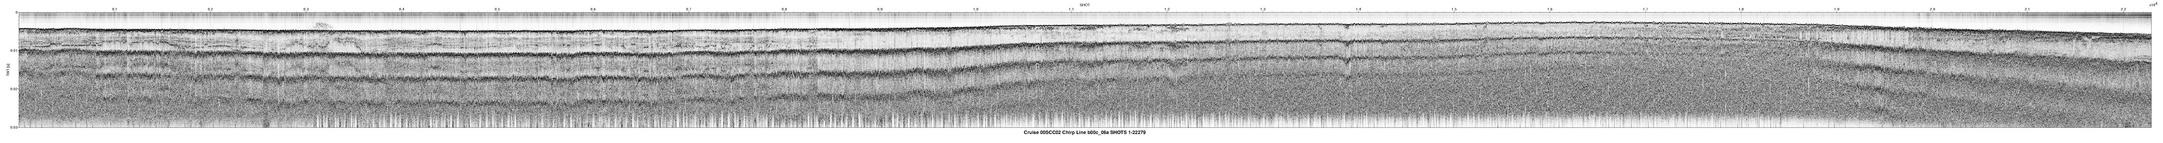 00SCC02 b00c_06a seismic profile image